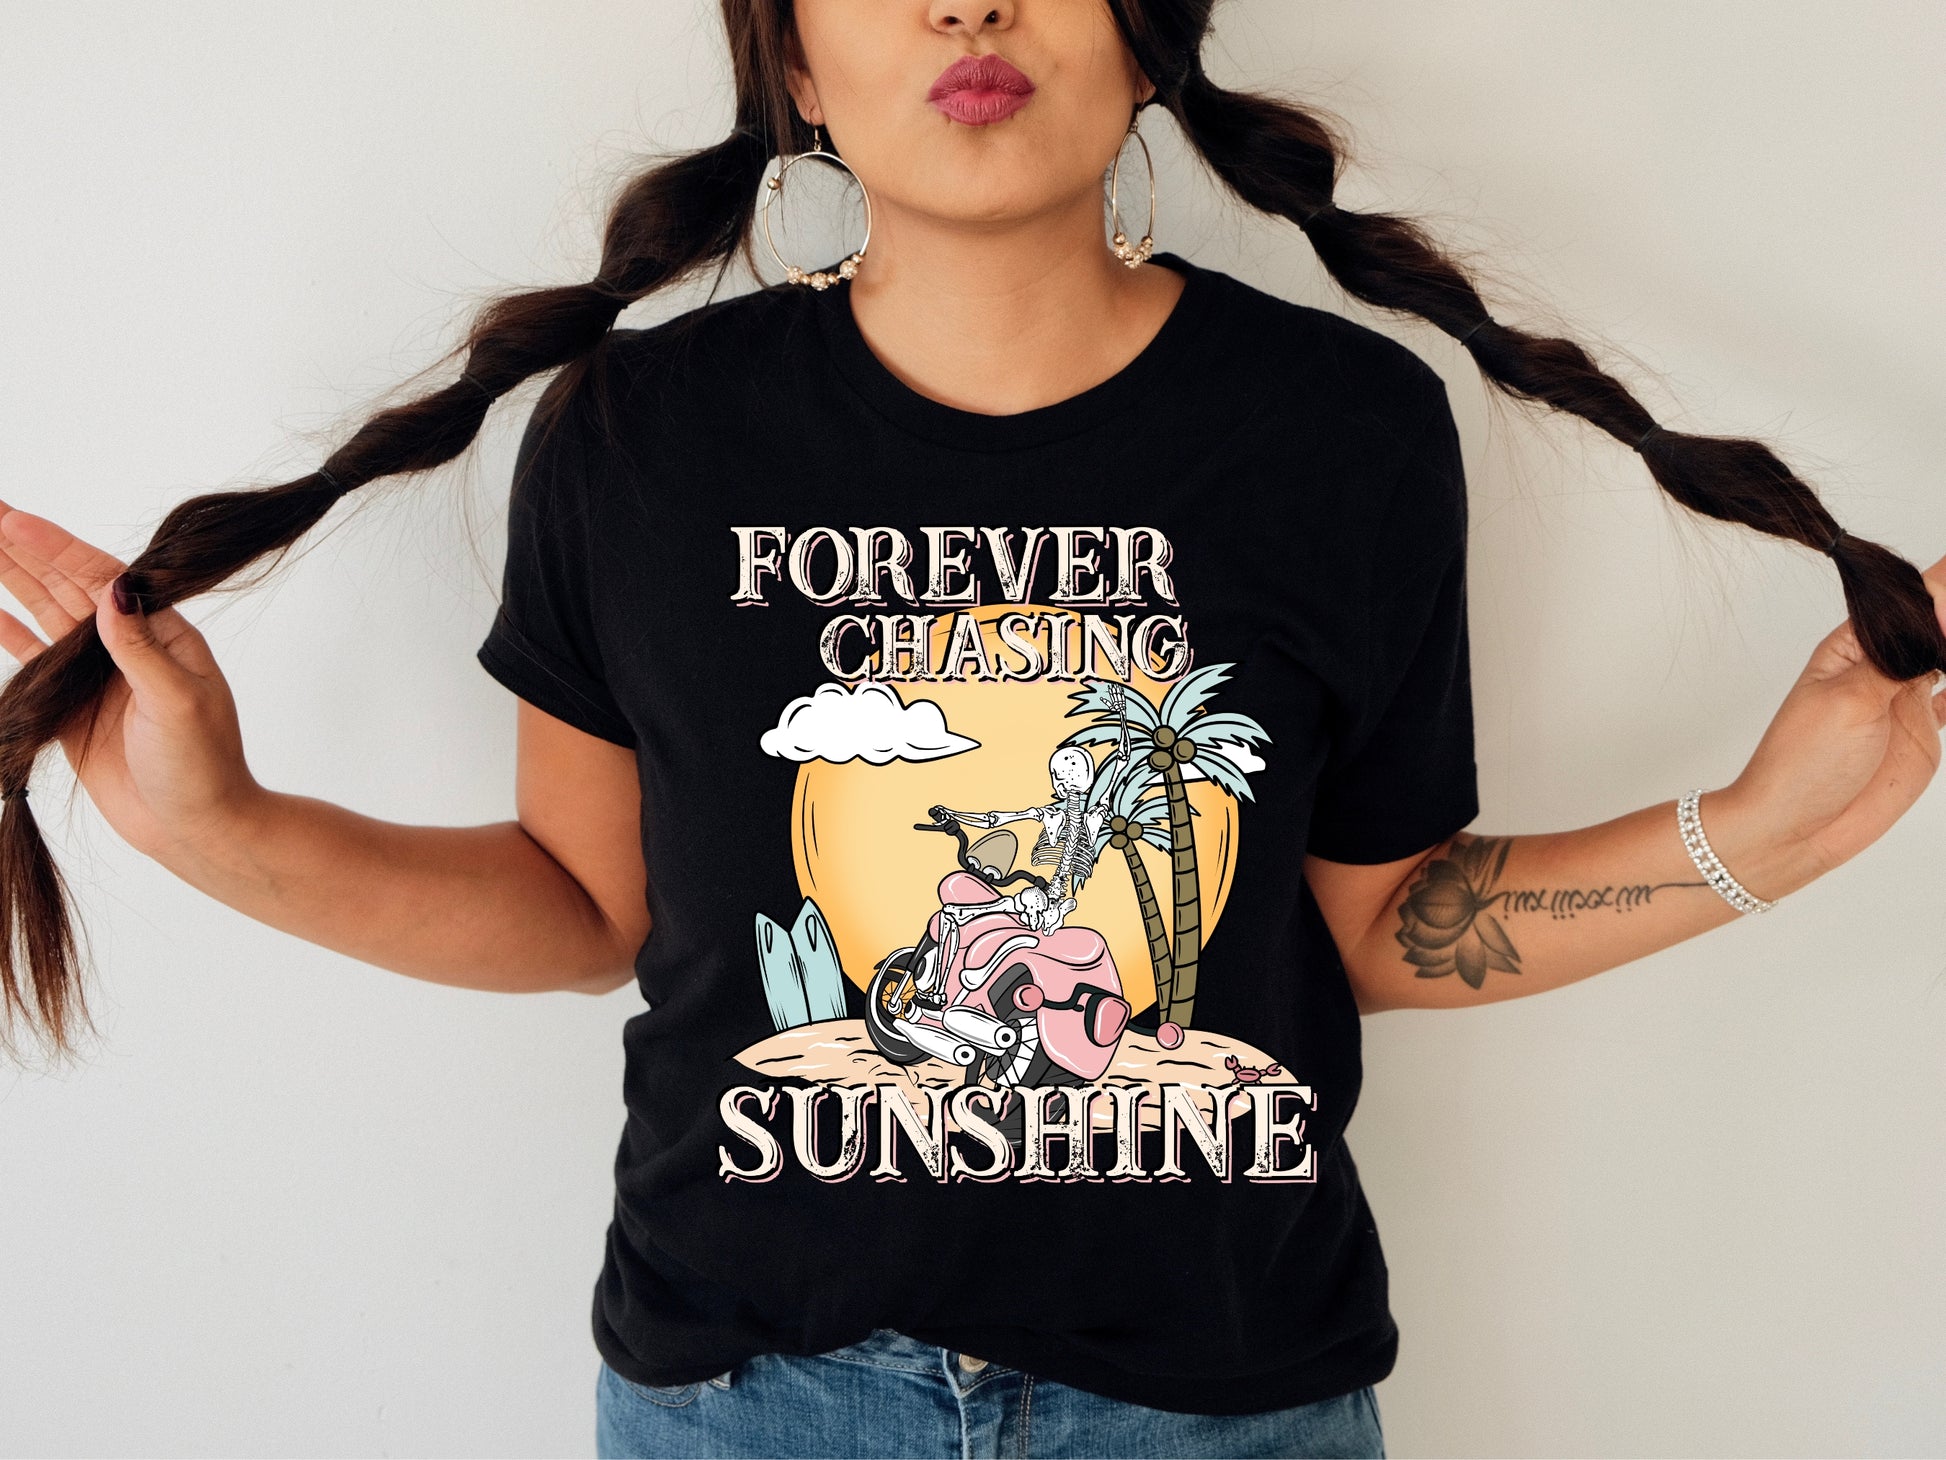 Forever chasing sunshine graphic tshirt